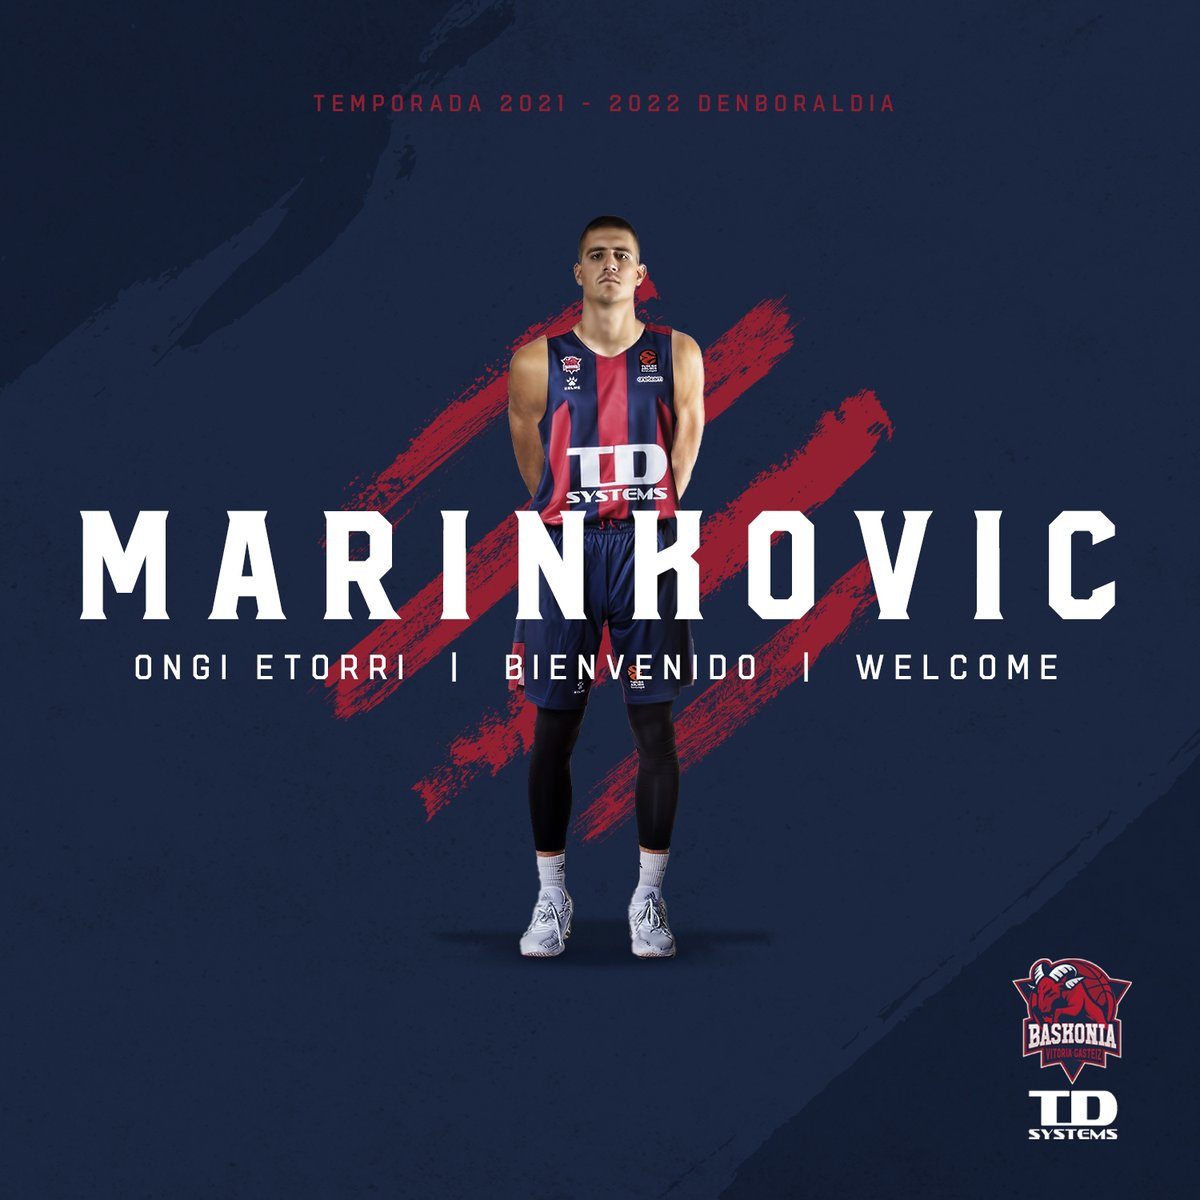 Baskonia signs Vanja Marinkovic